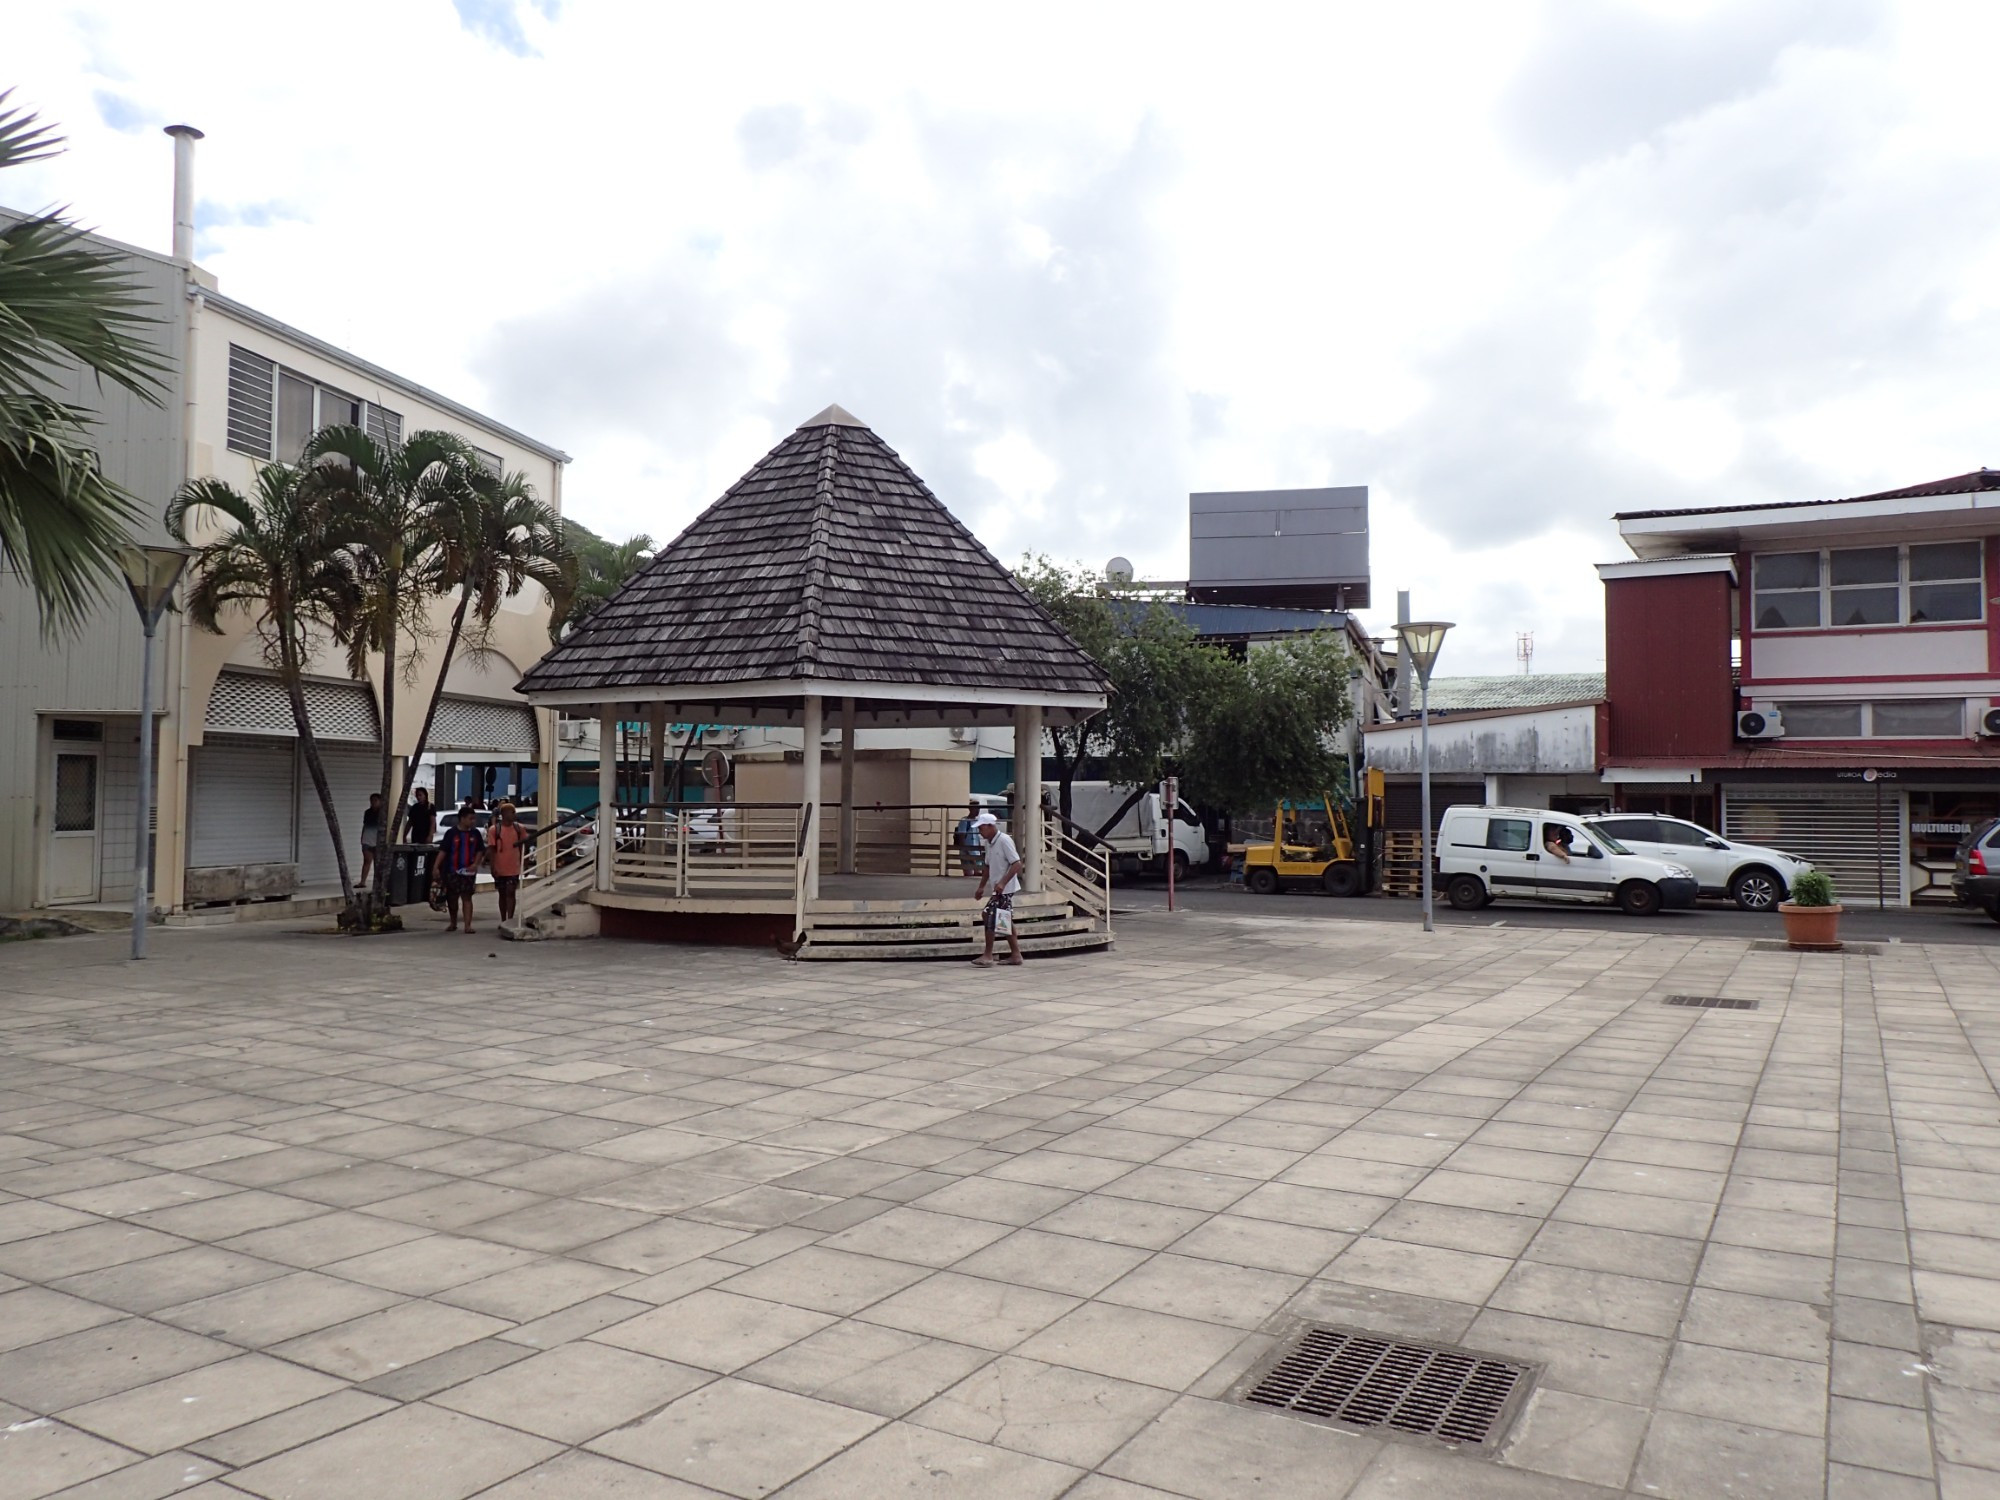 Uturoa Town Centre, Французская Полинезия